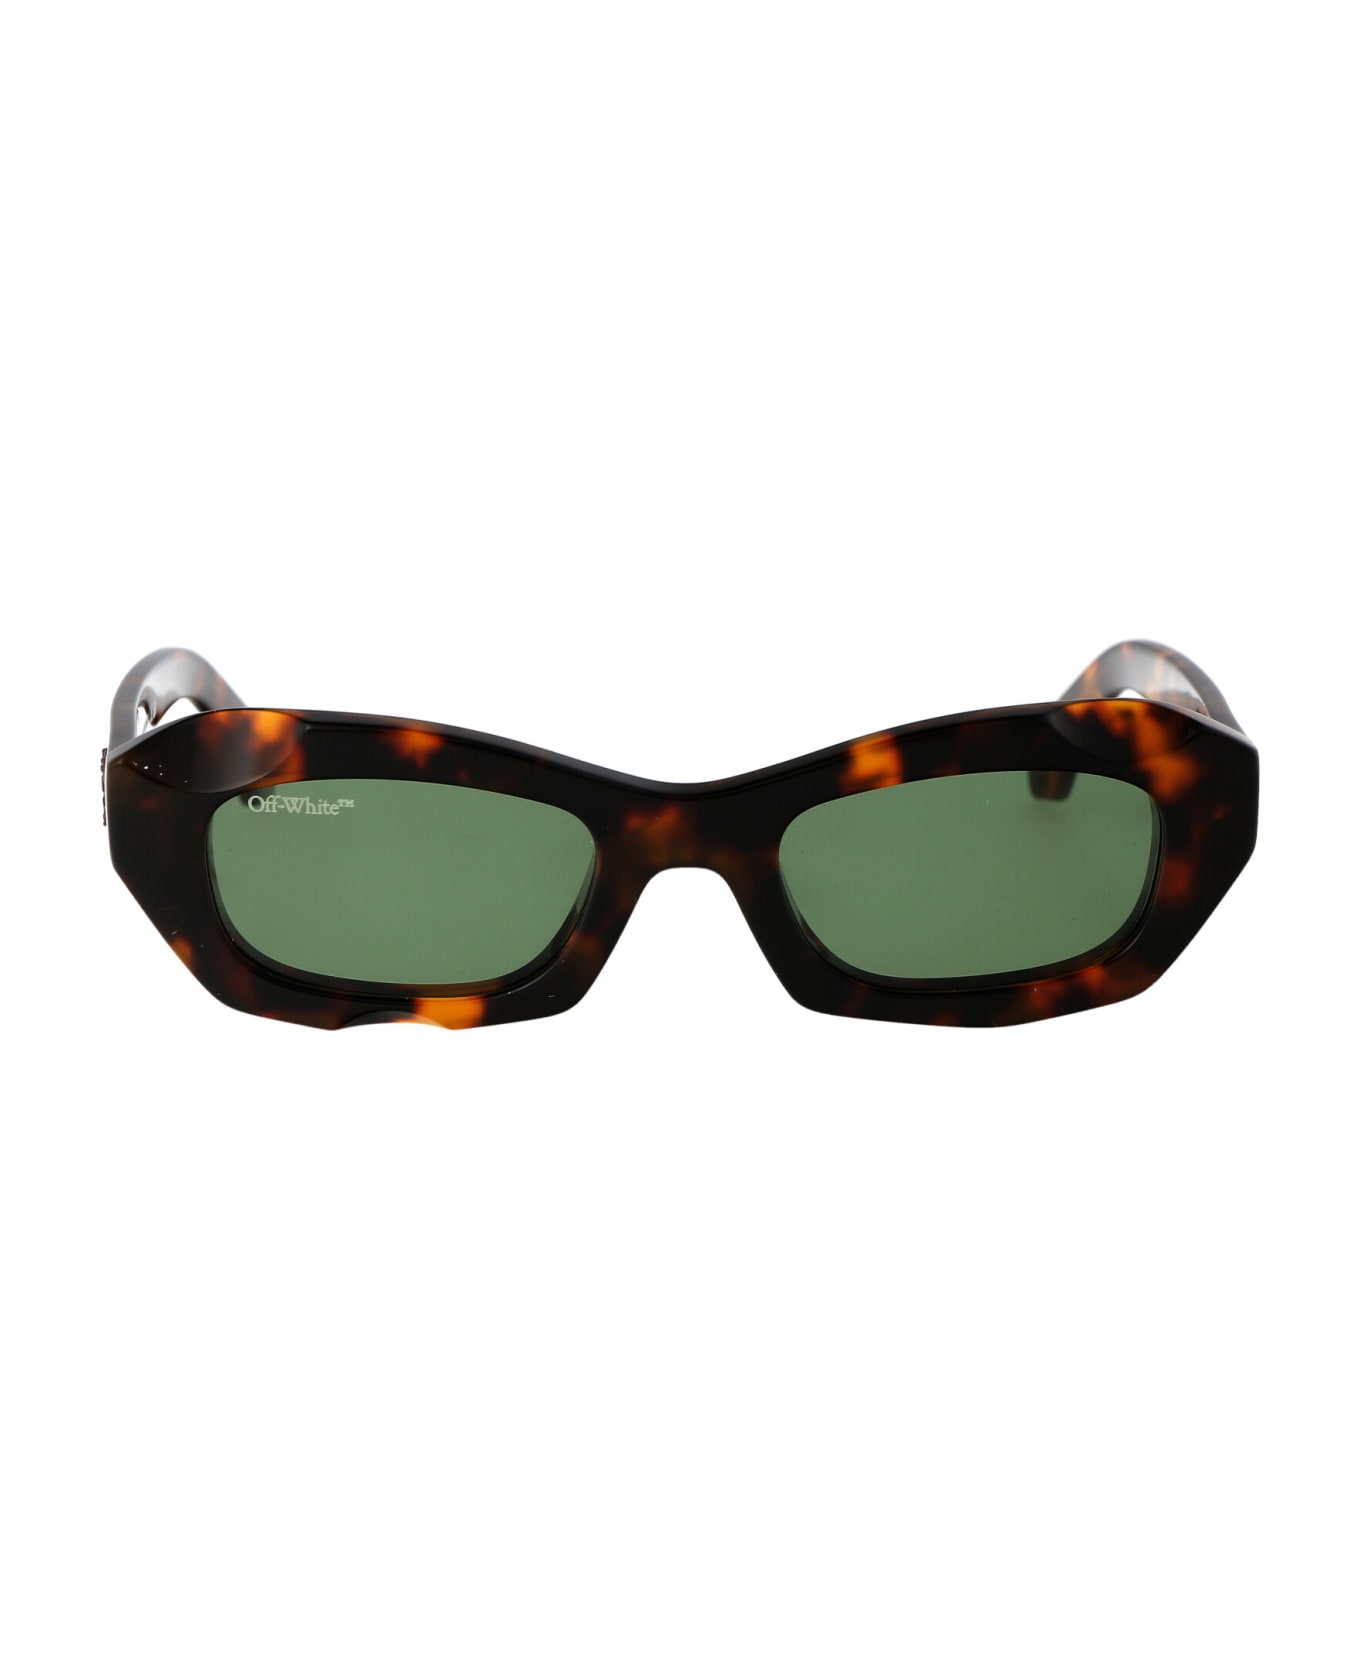 Off-White Venezia Sunglasses - 6055 HAVANA サングラス